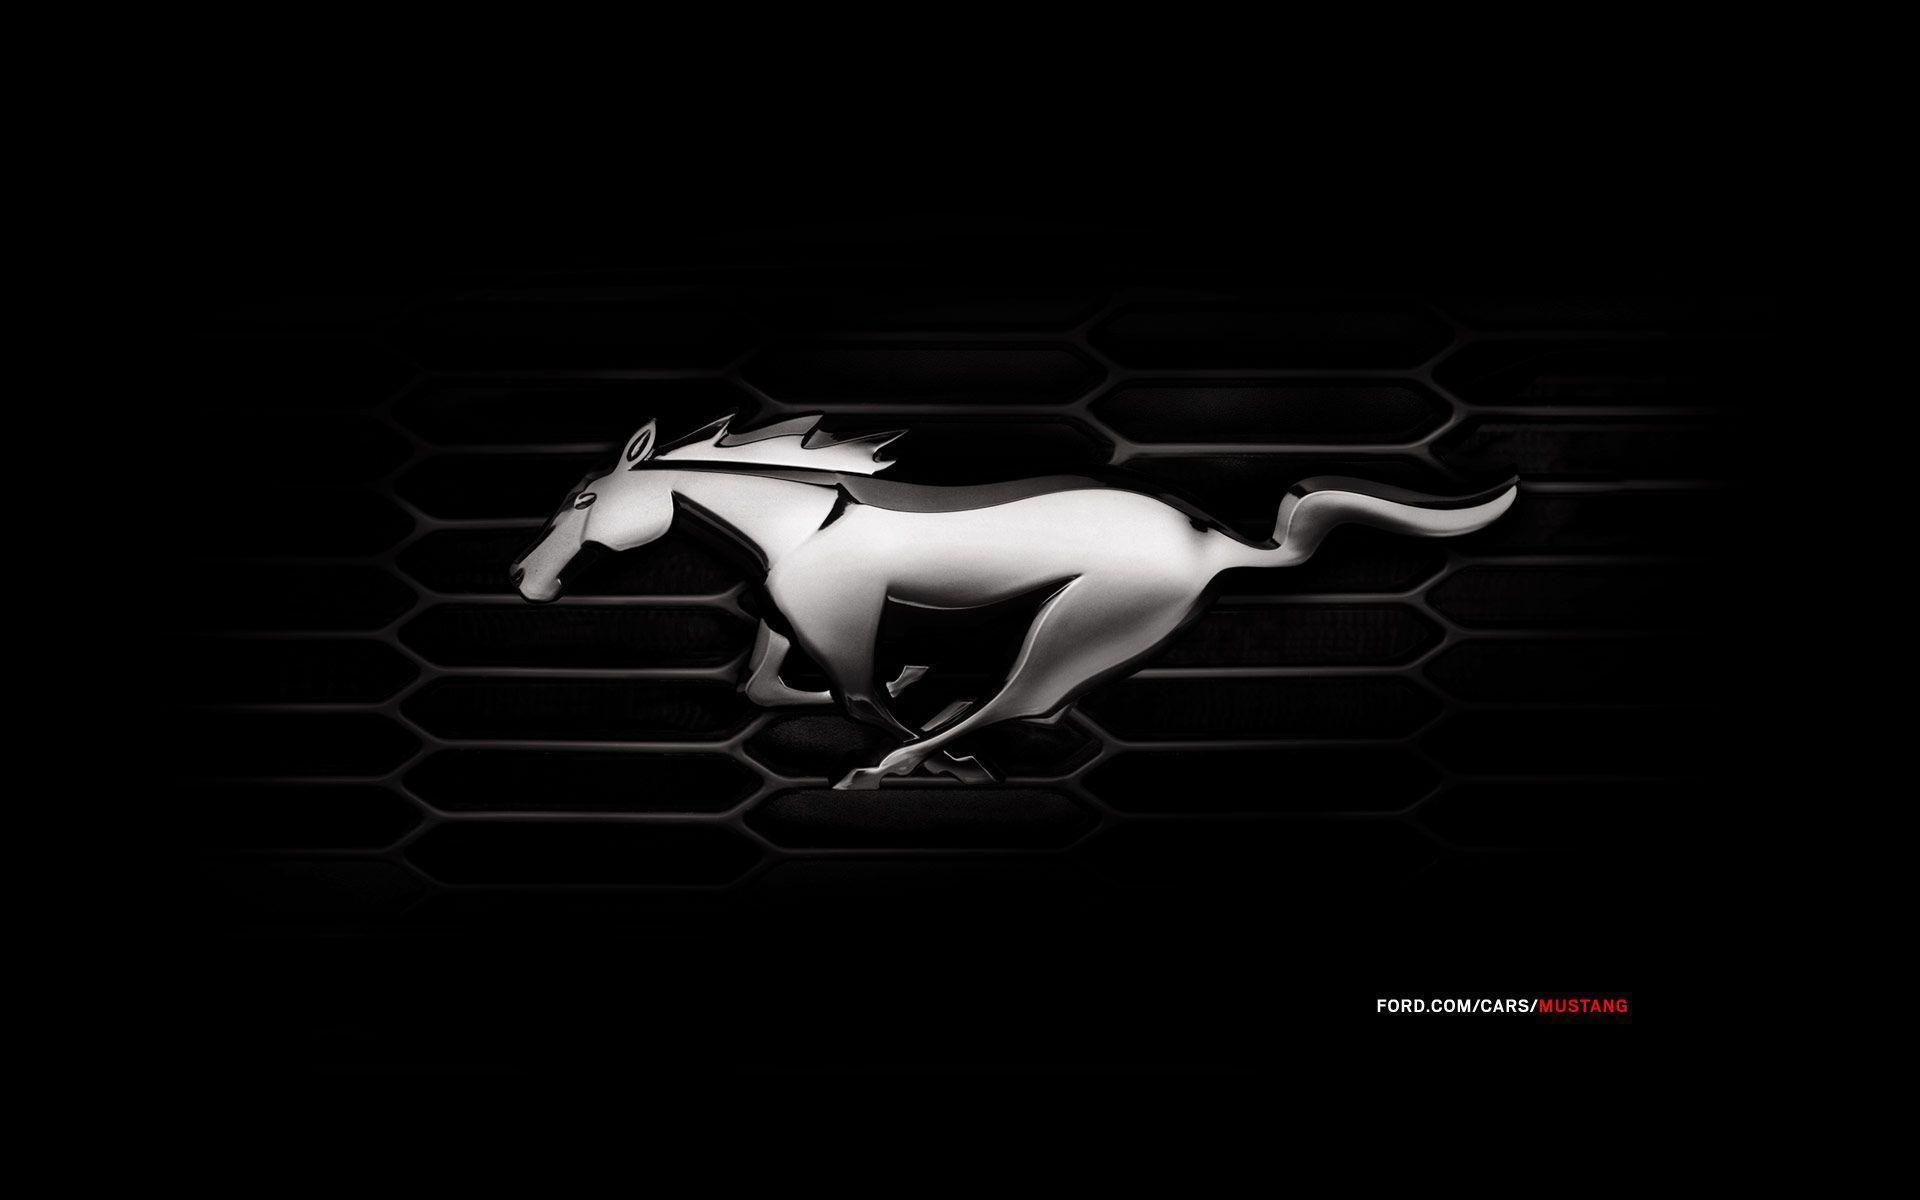 Best Collection of Mustang Wallpaper For Desktop Screens